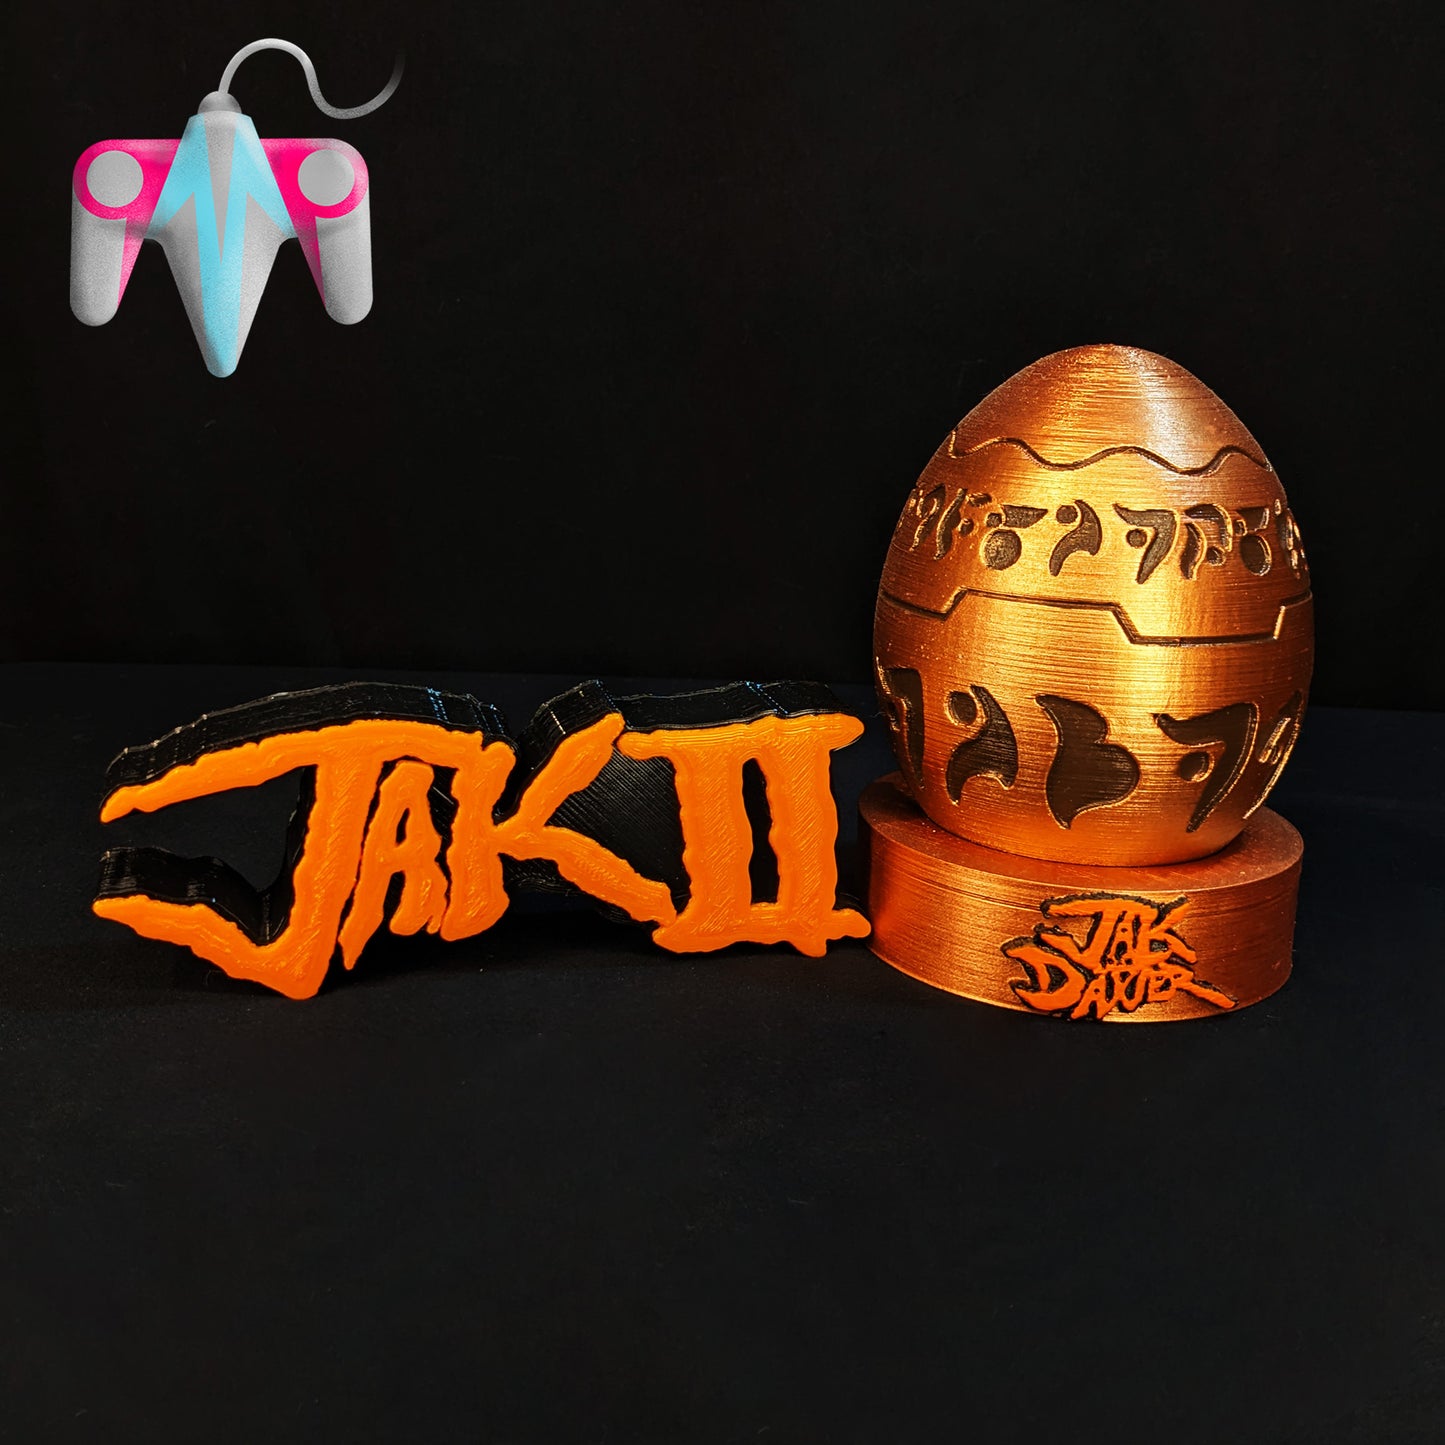 3D Printed Jak II Wall/Shelf Decor (FREE SHIPPING)